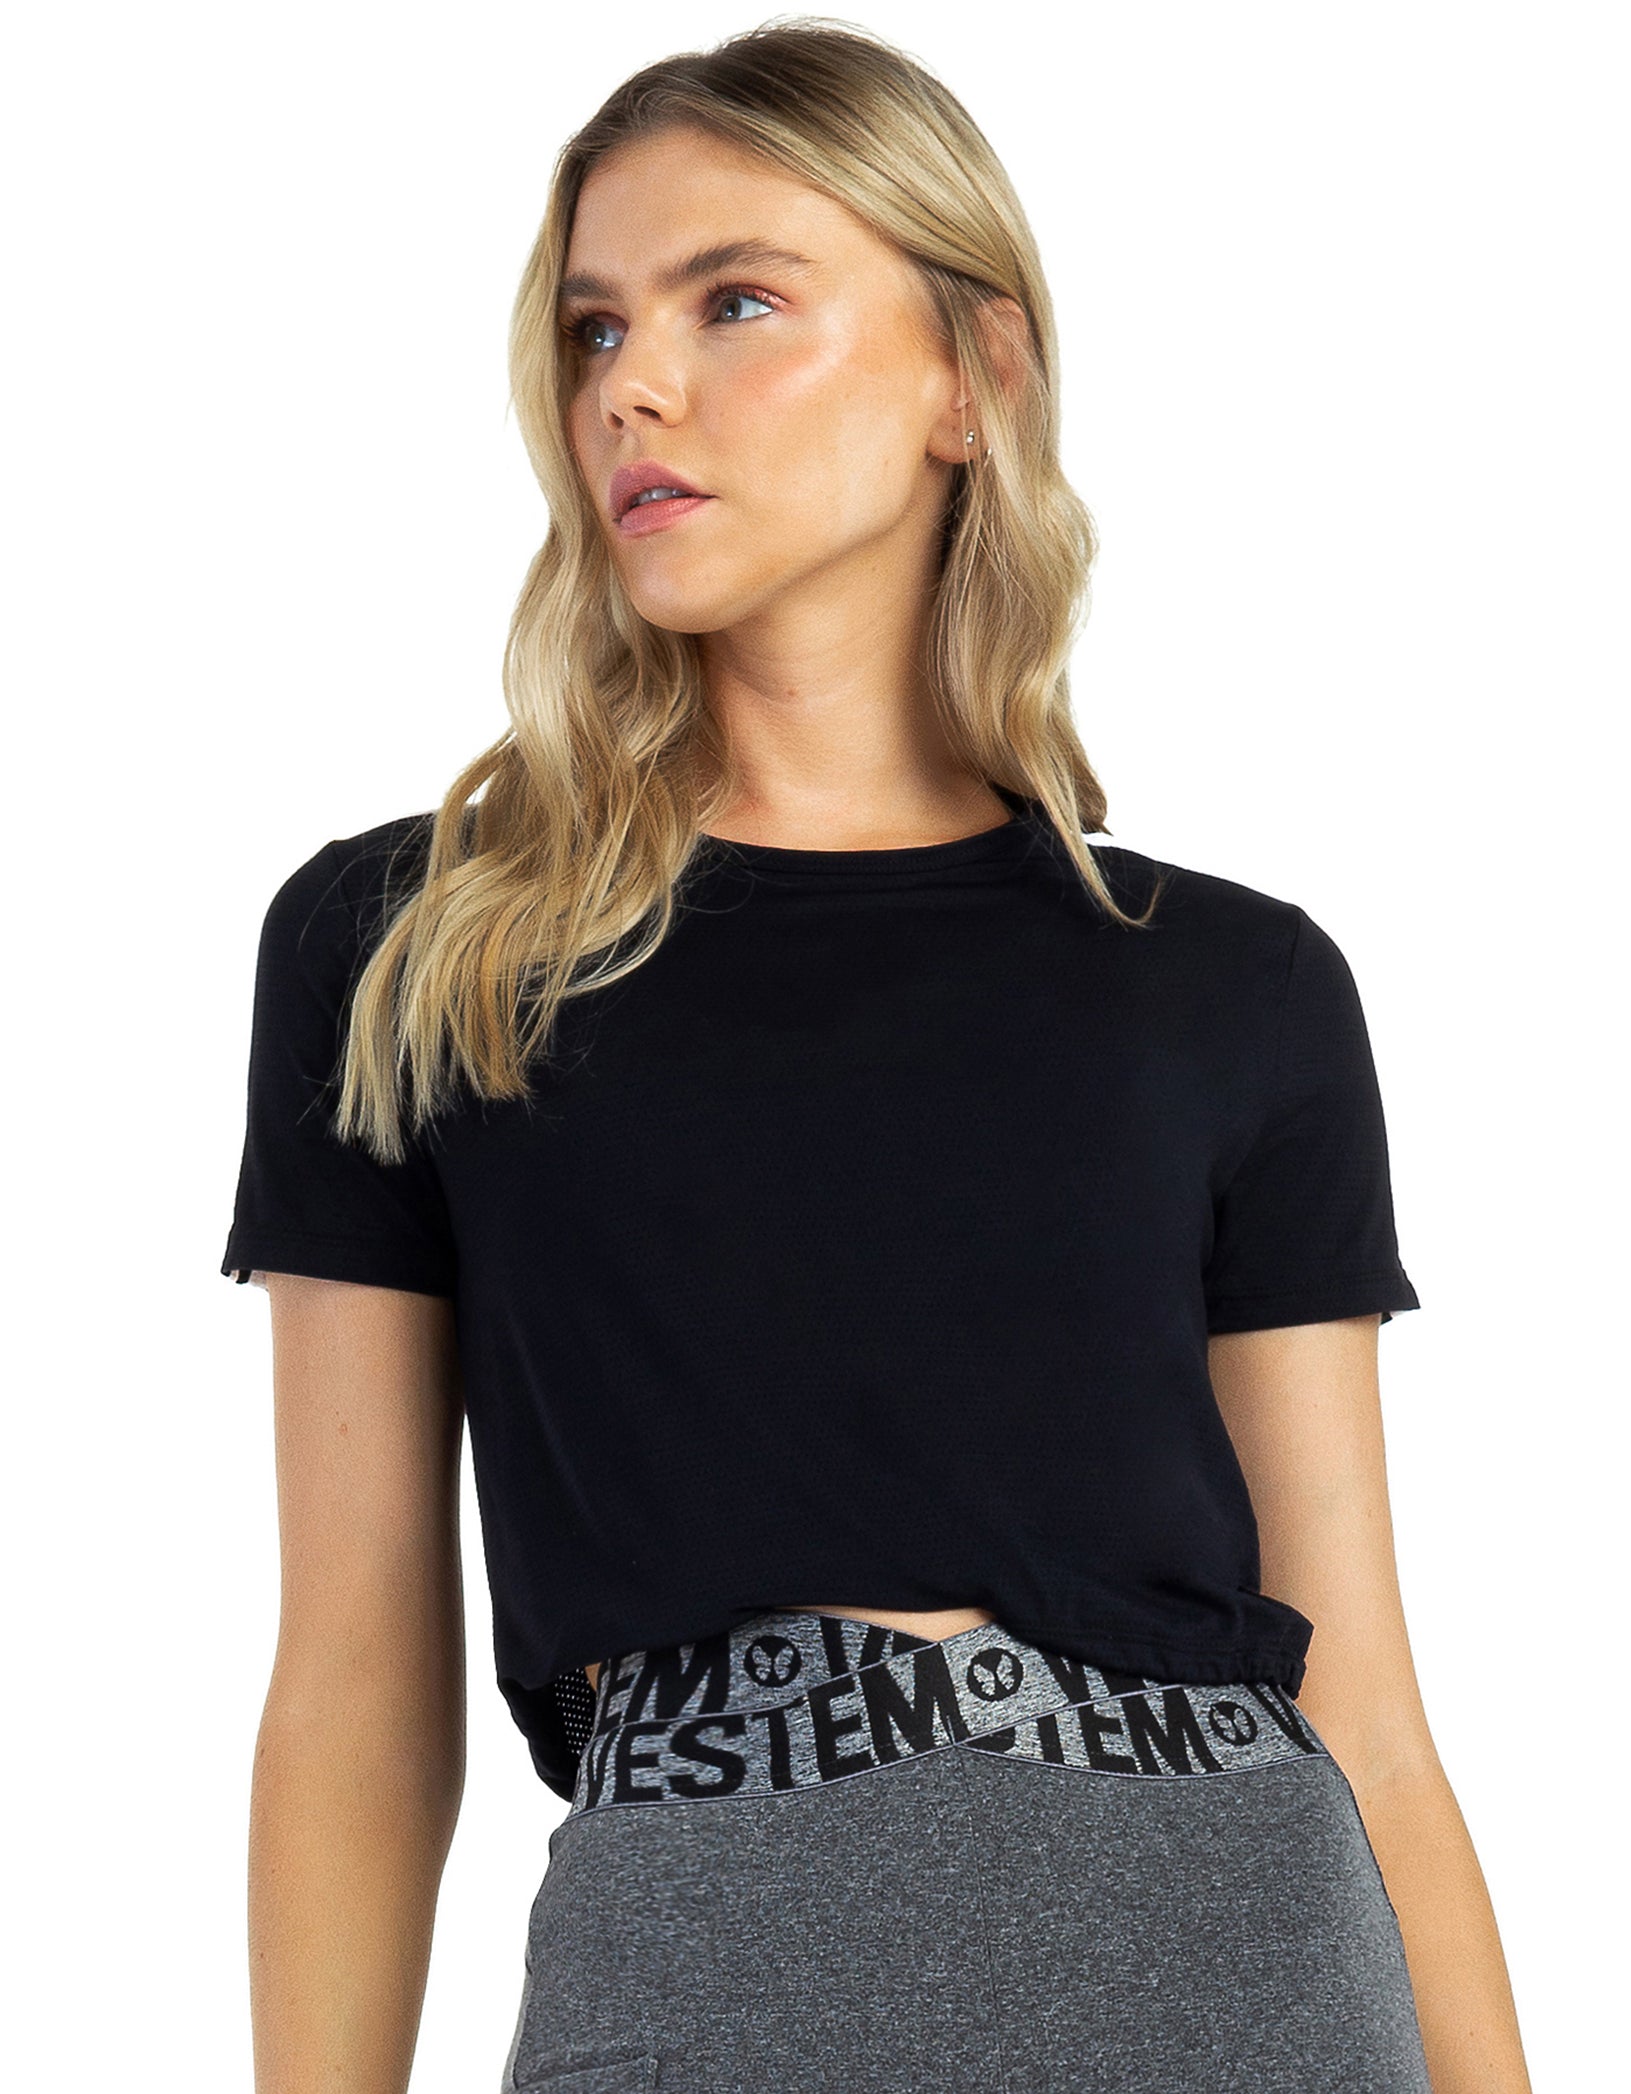 Vestem - Short Sleeve Shirt Dry Fit Monet Black - BMC548C0002